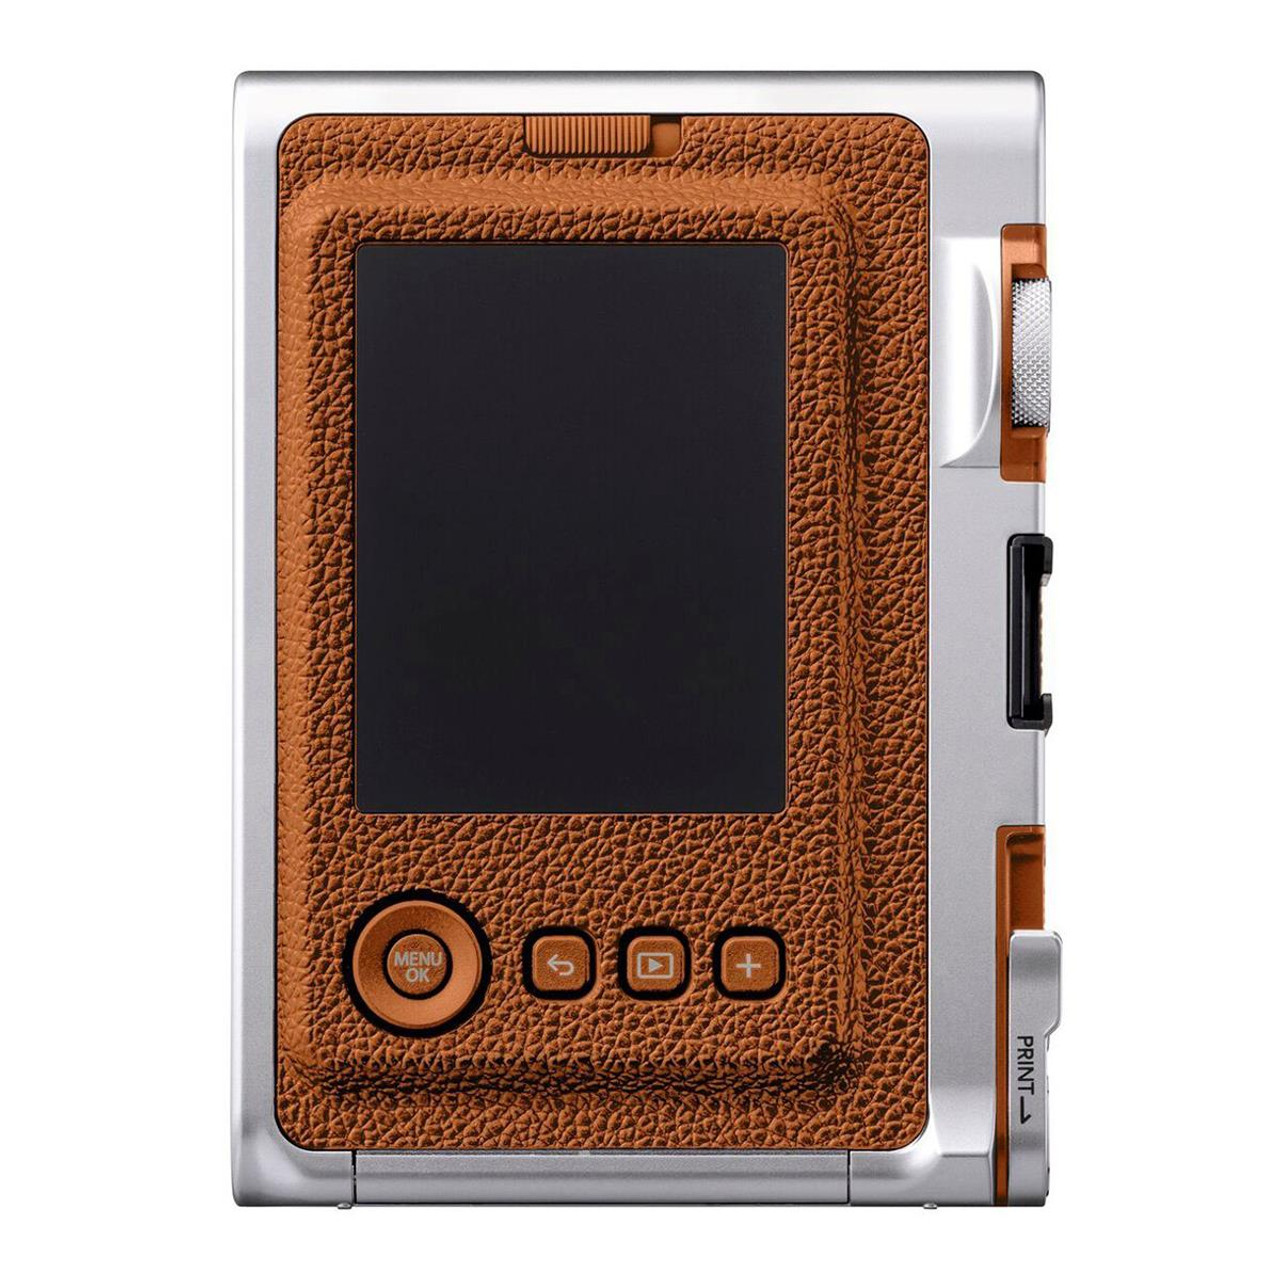 FUJIFILM INSTAX MINI EVO Hybrid Instant Camera (Brown) (74101208467)